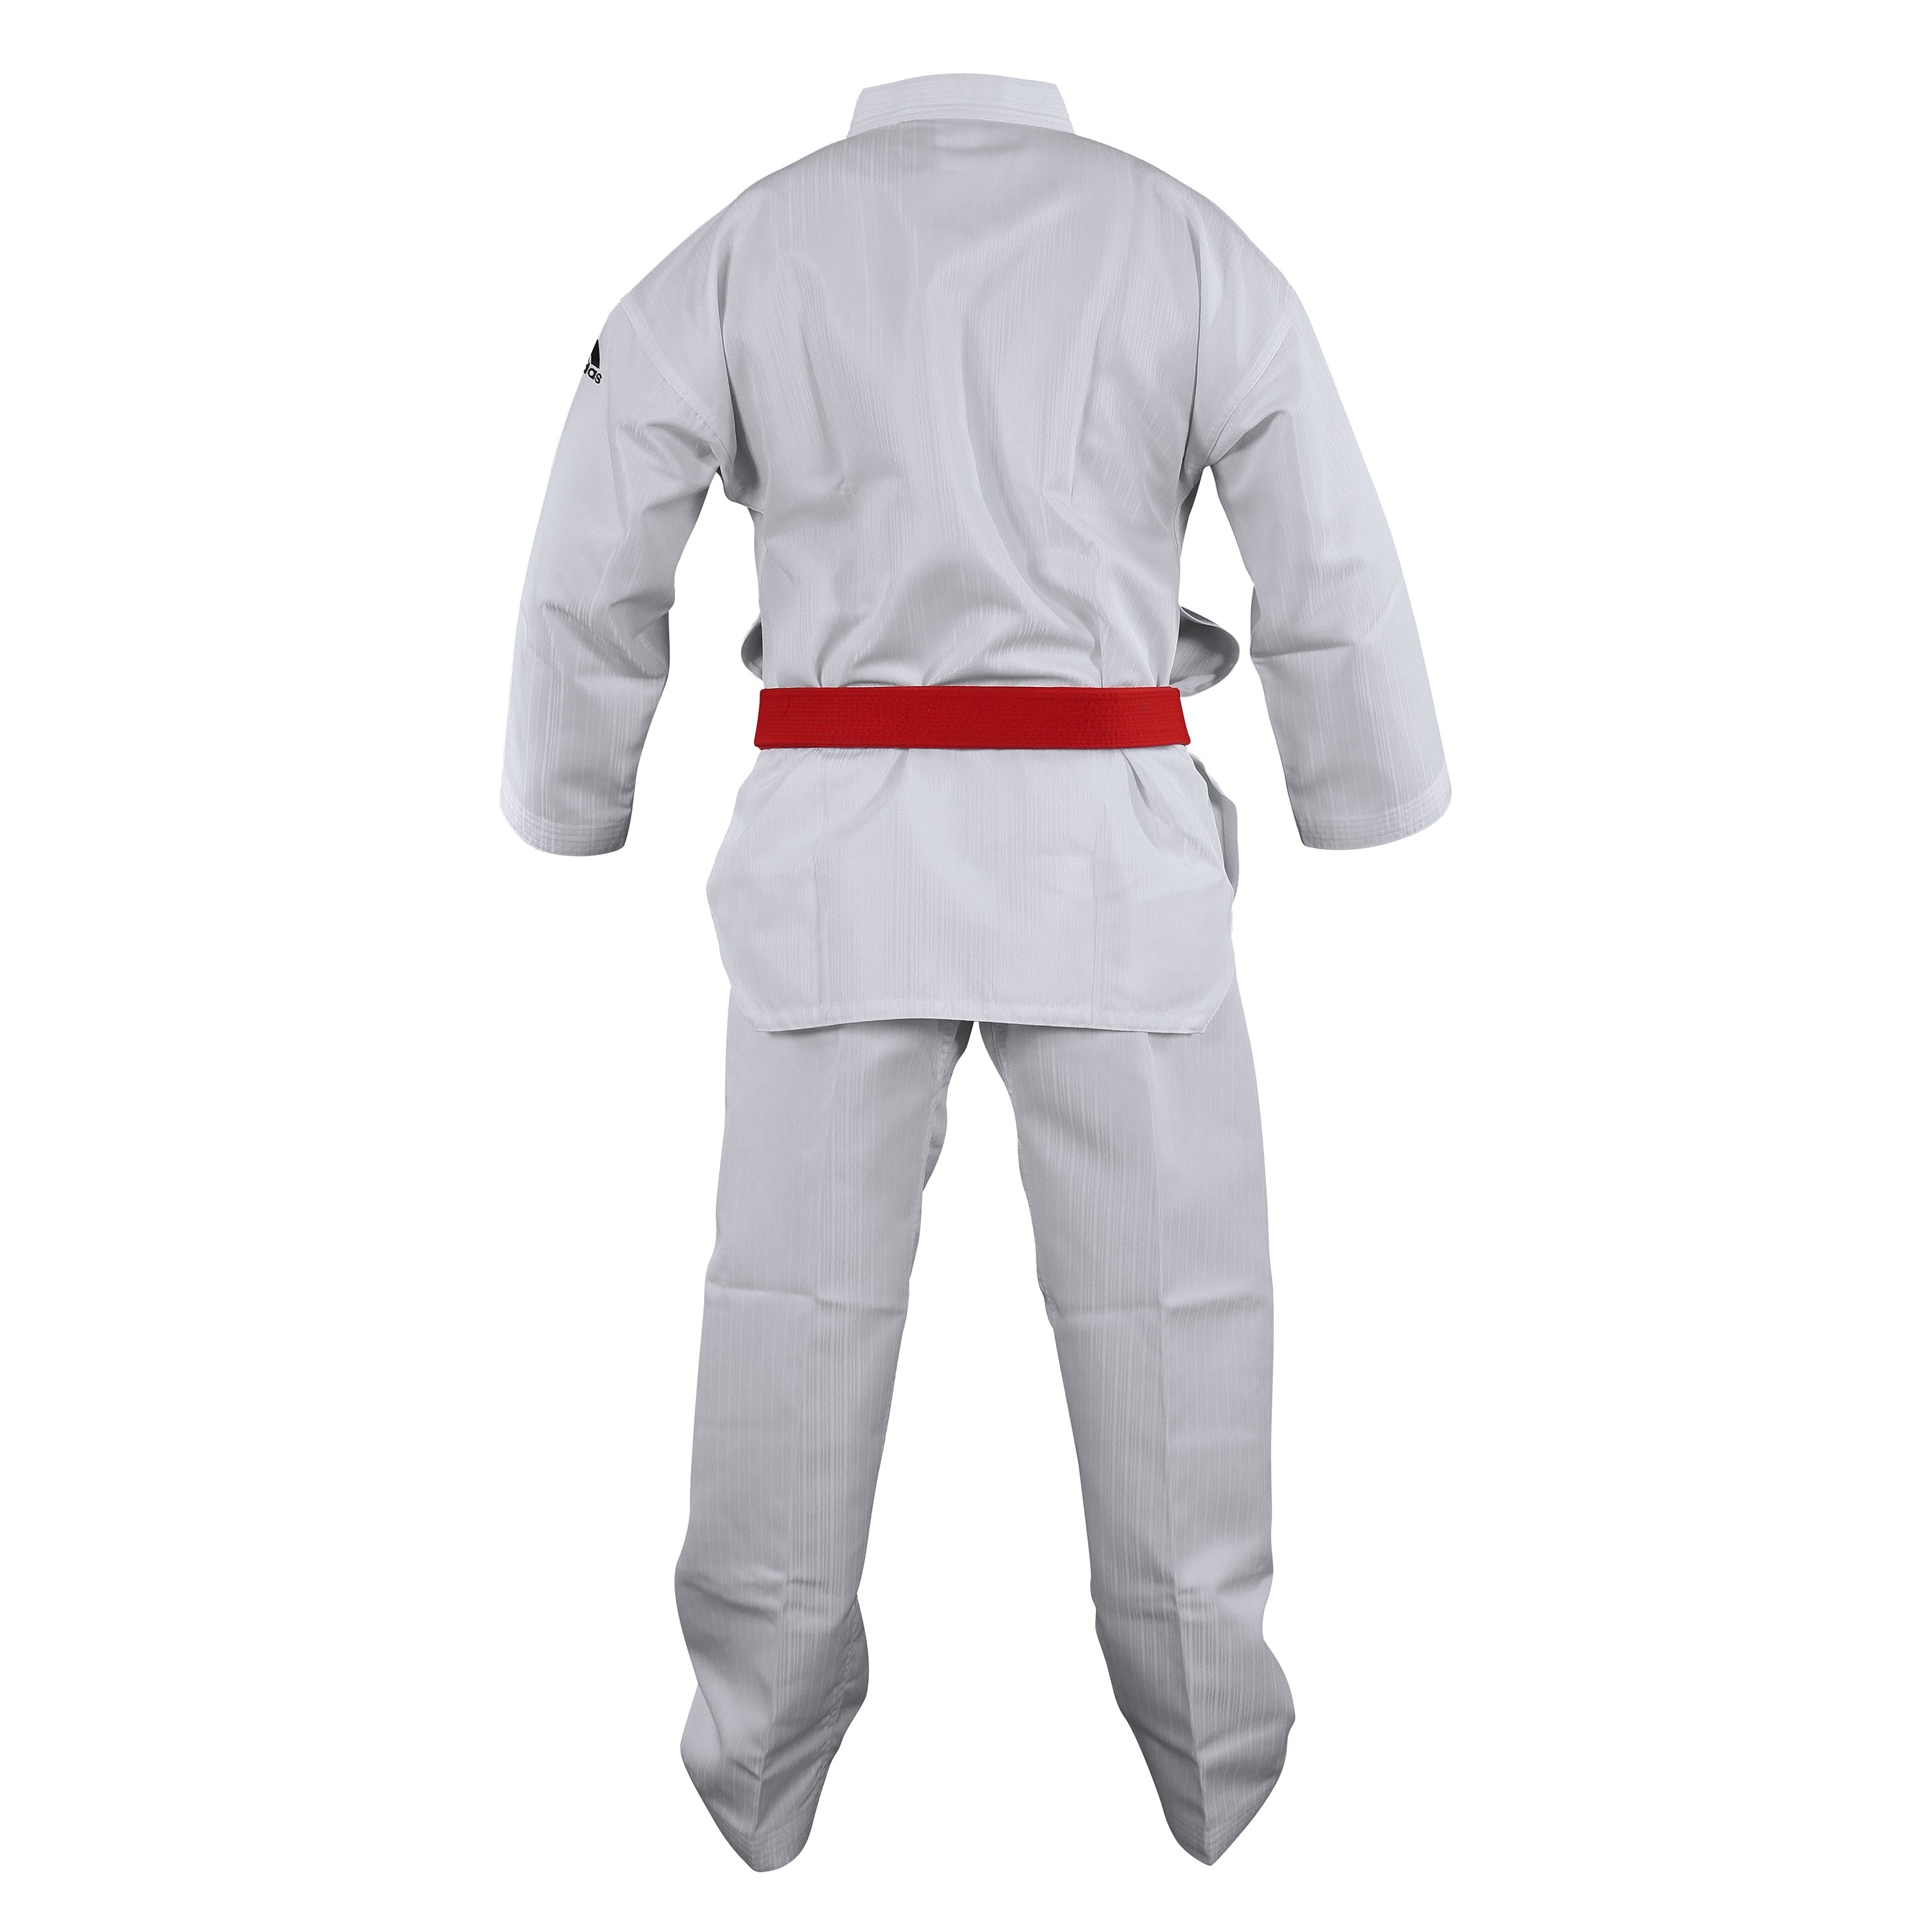 adi-Start II Taekwondo Uniform with USA on Hip and USA Flag Patch on Arm